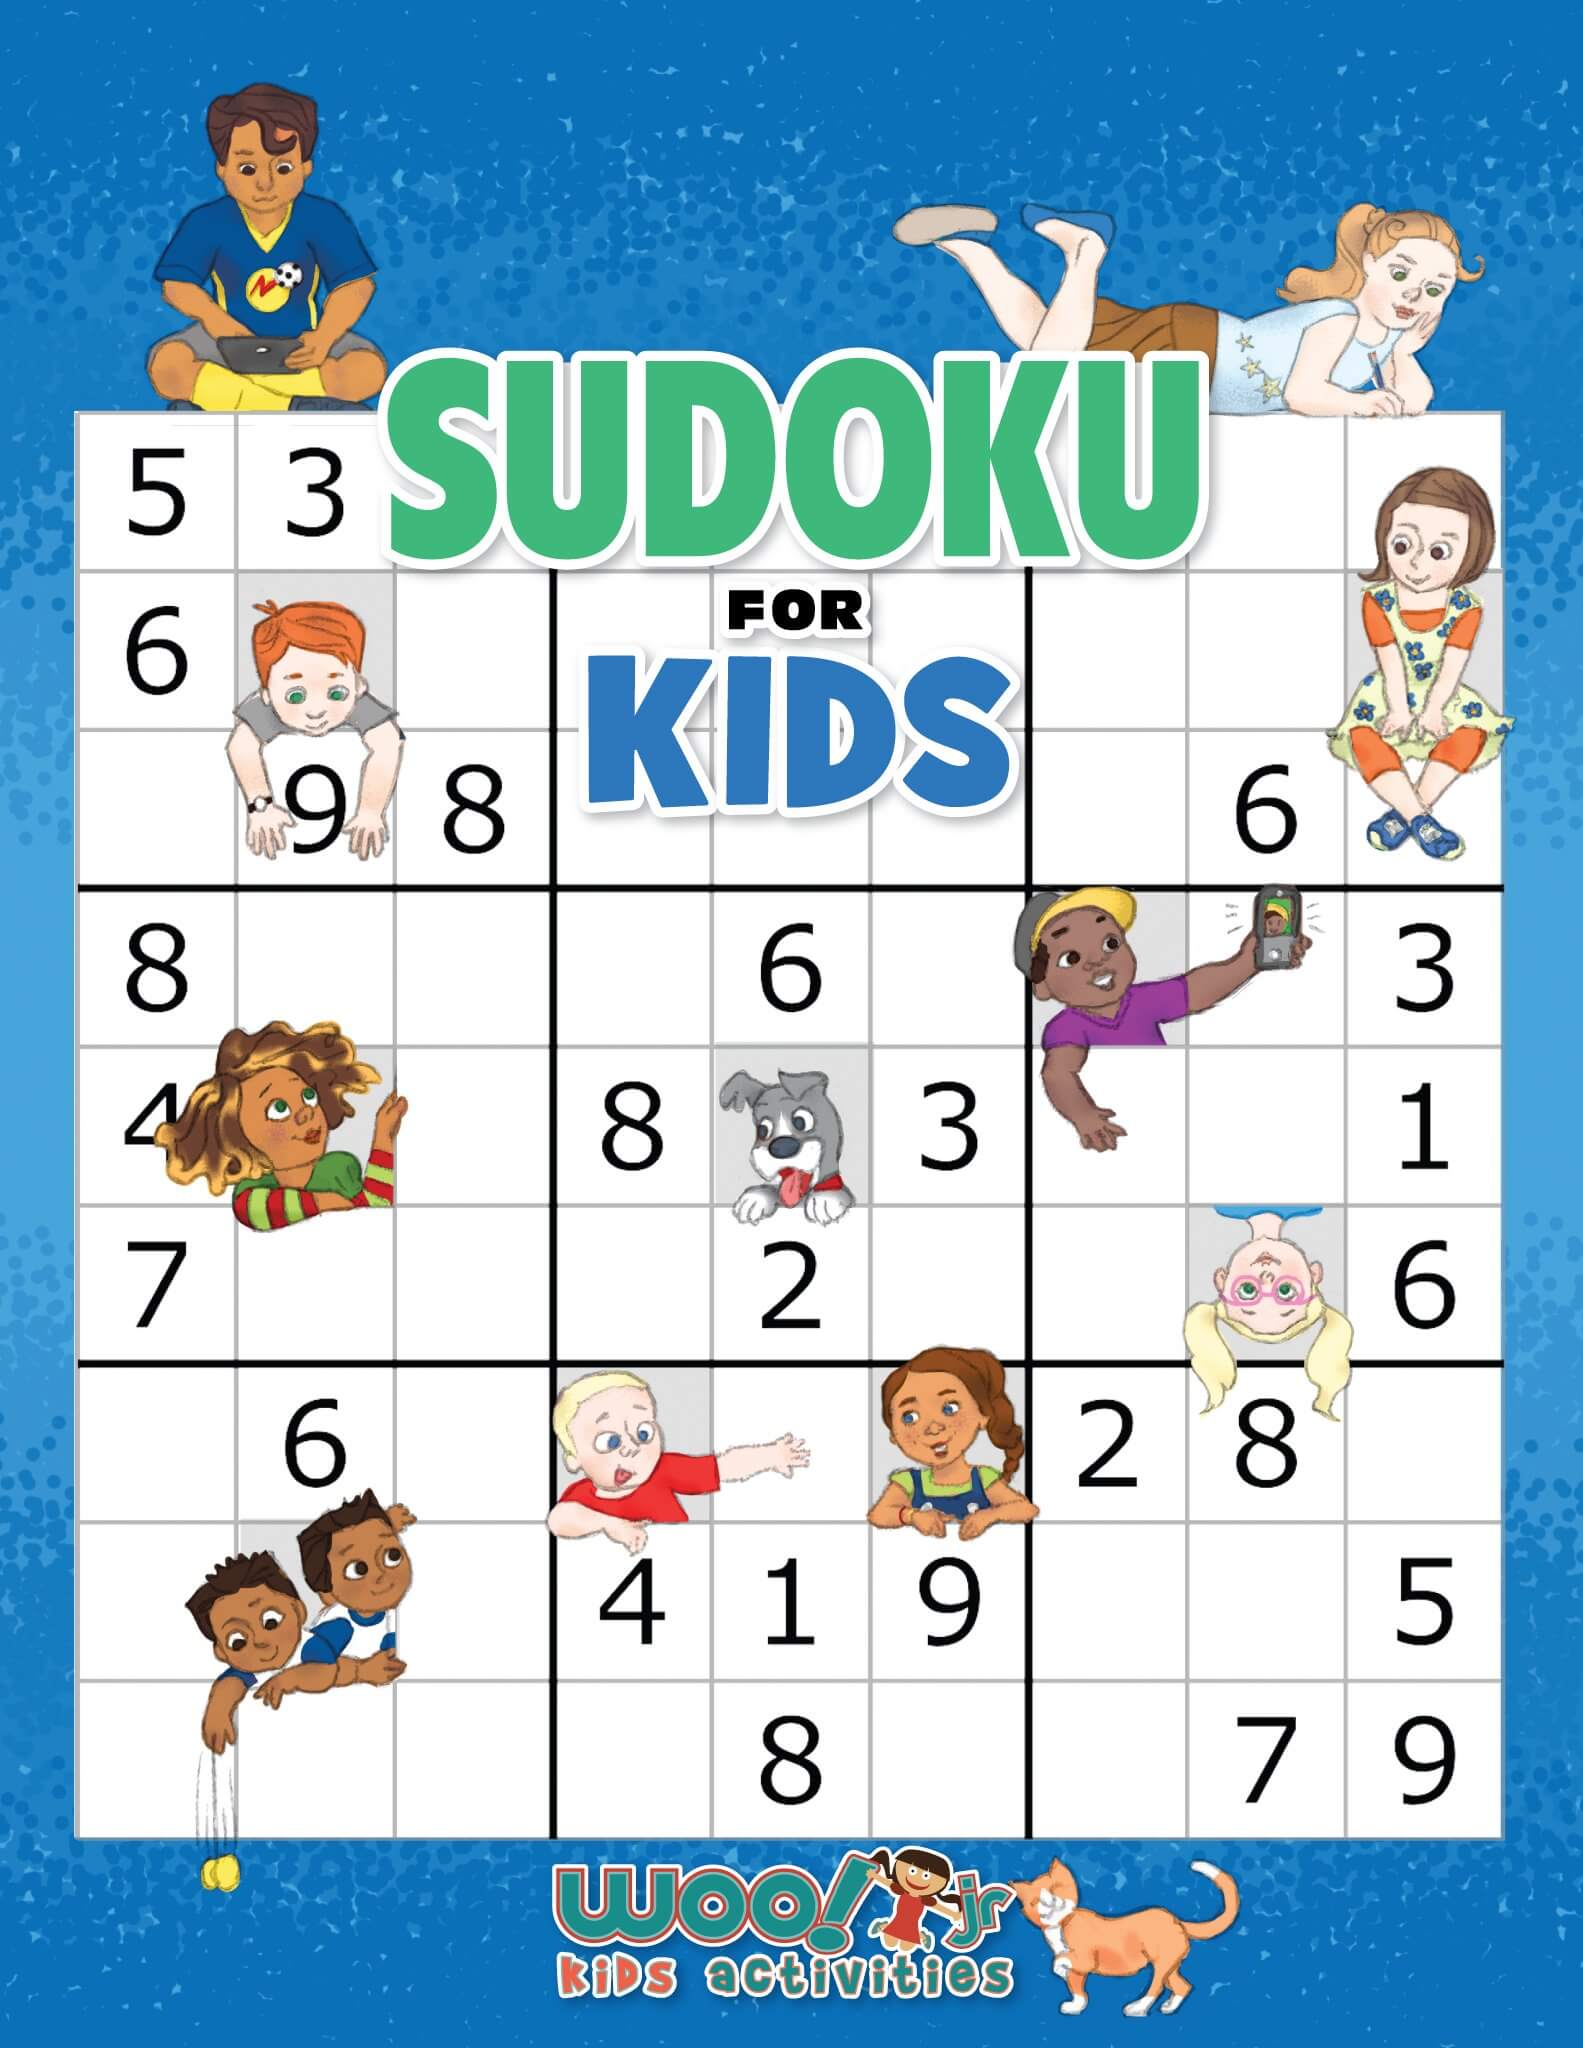 Sudoku 4x4 Puzzle 6